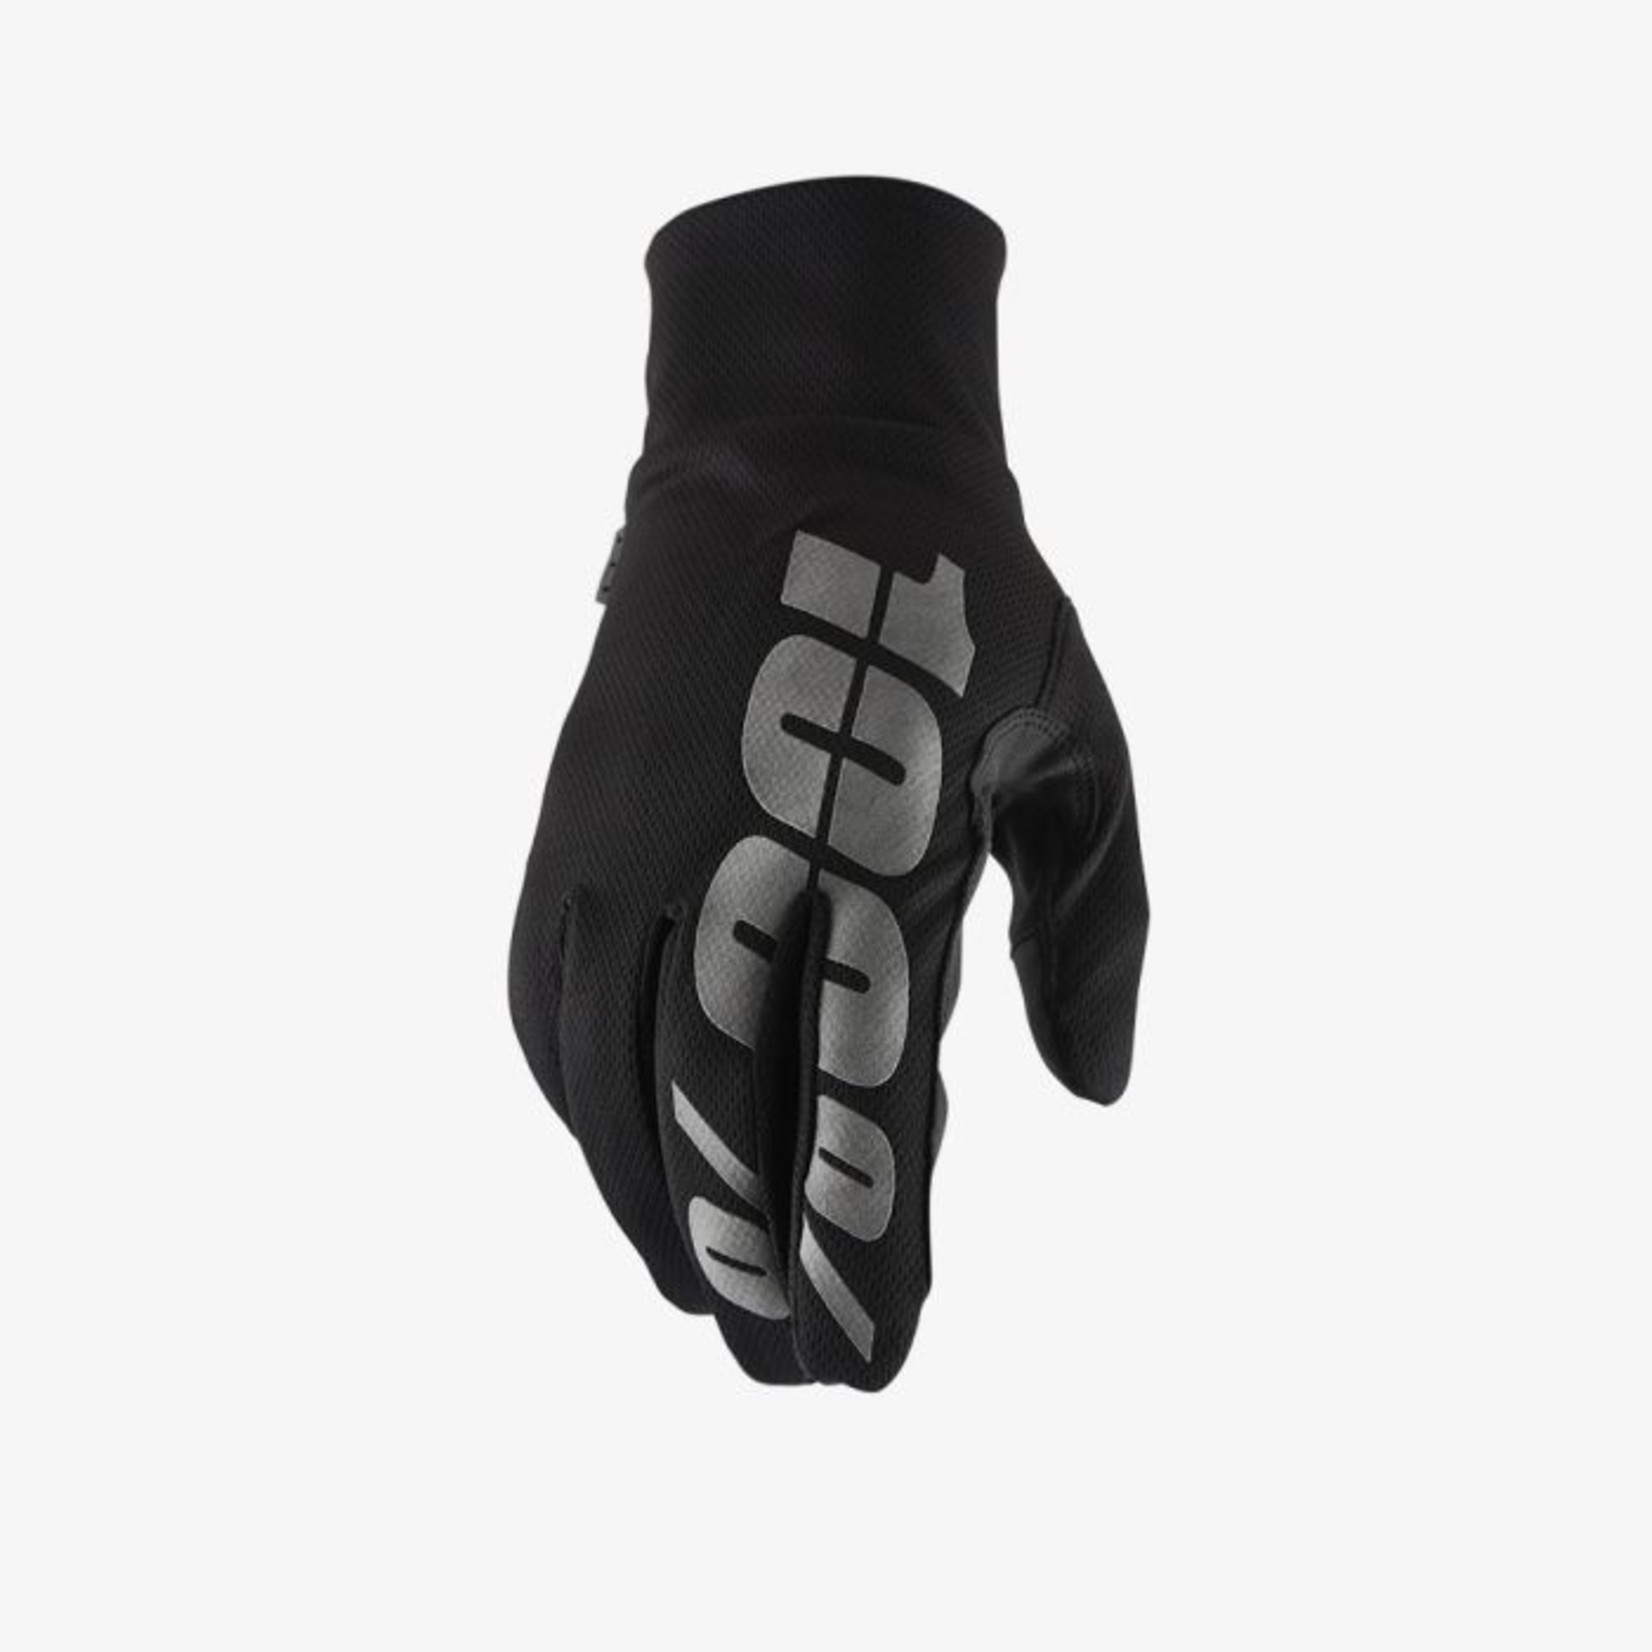 100 Percent 100% Hydromatic Waterproof Bike Cycling Gloves - Black -Polyester